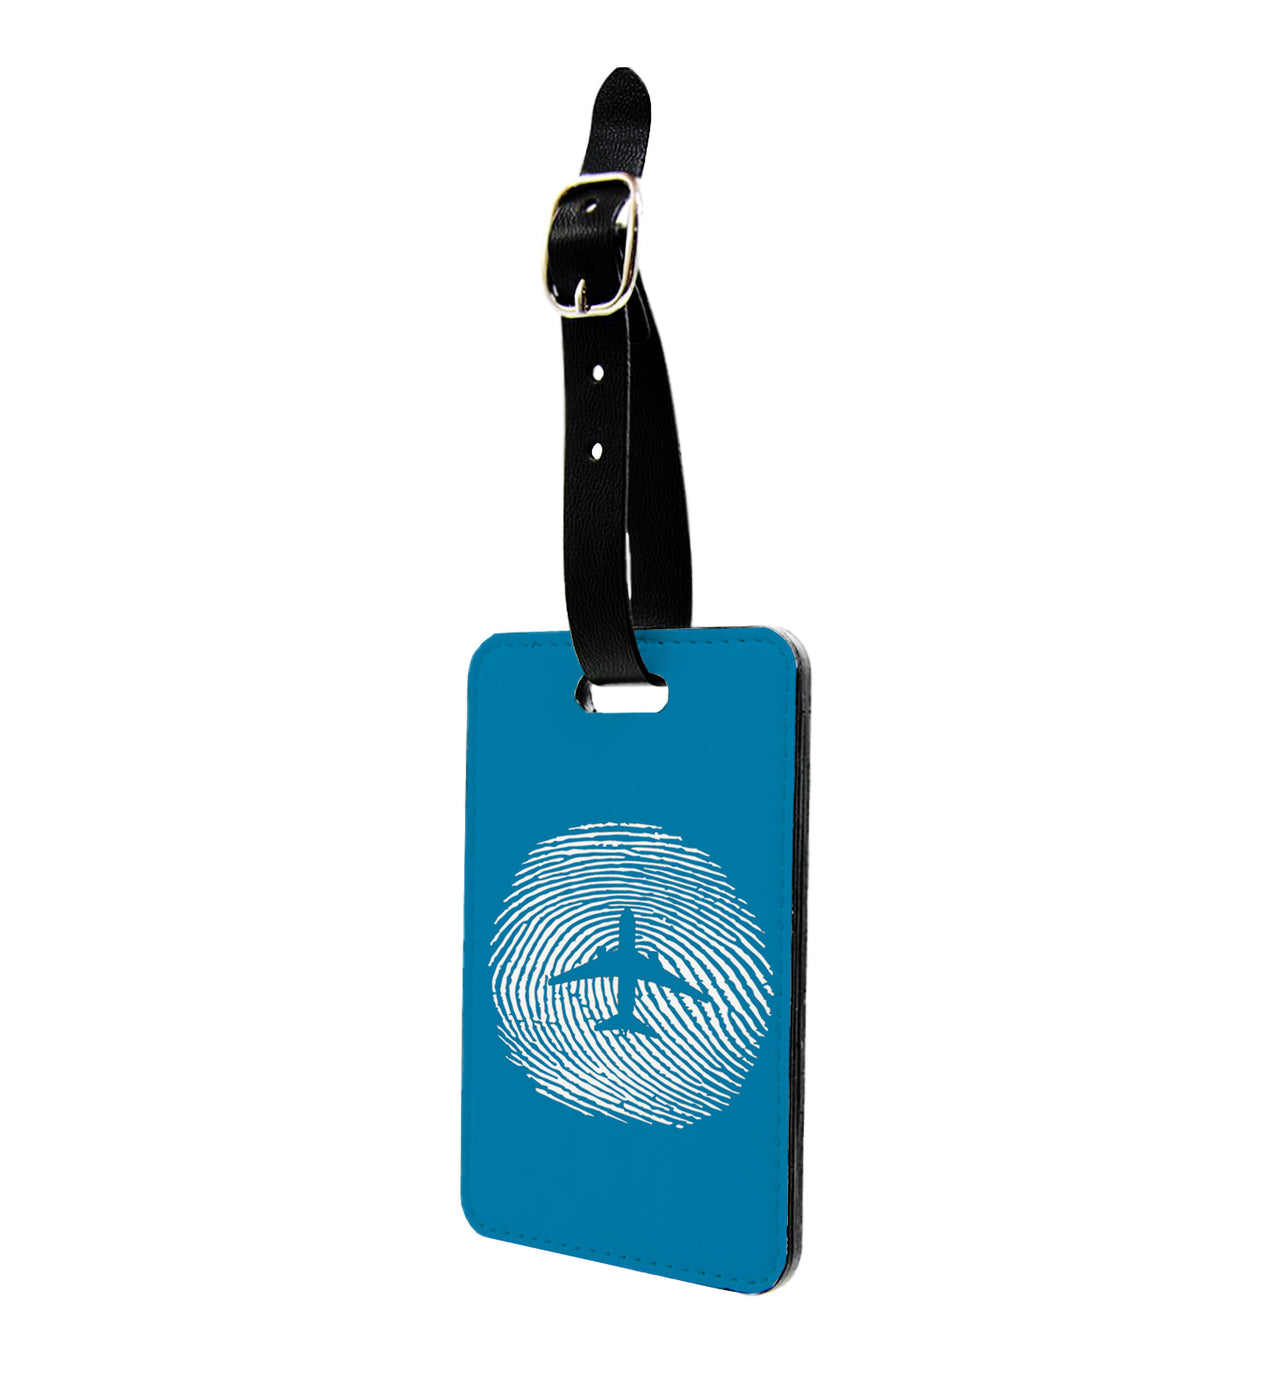 Aviation Finger Print Designed Luggage Tag